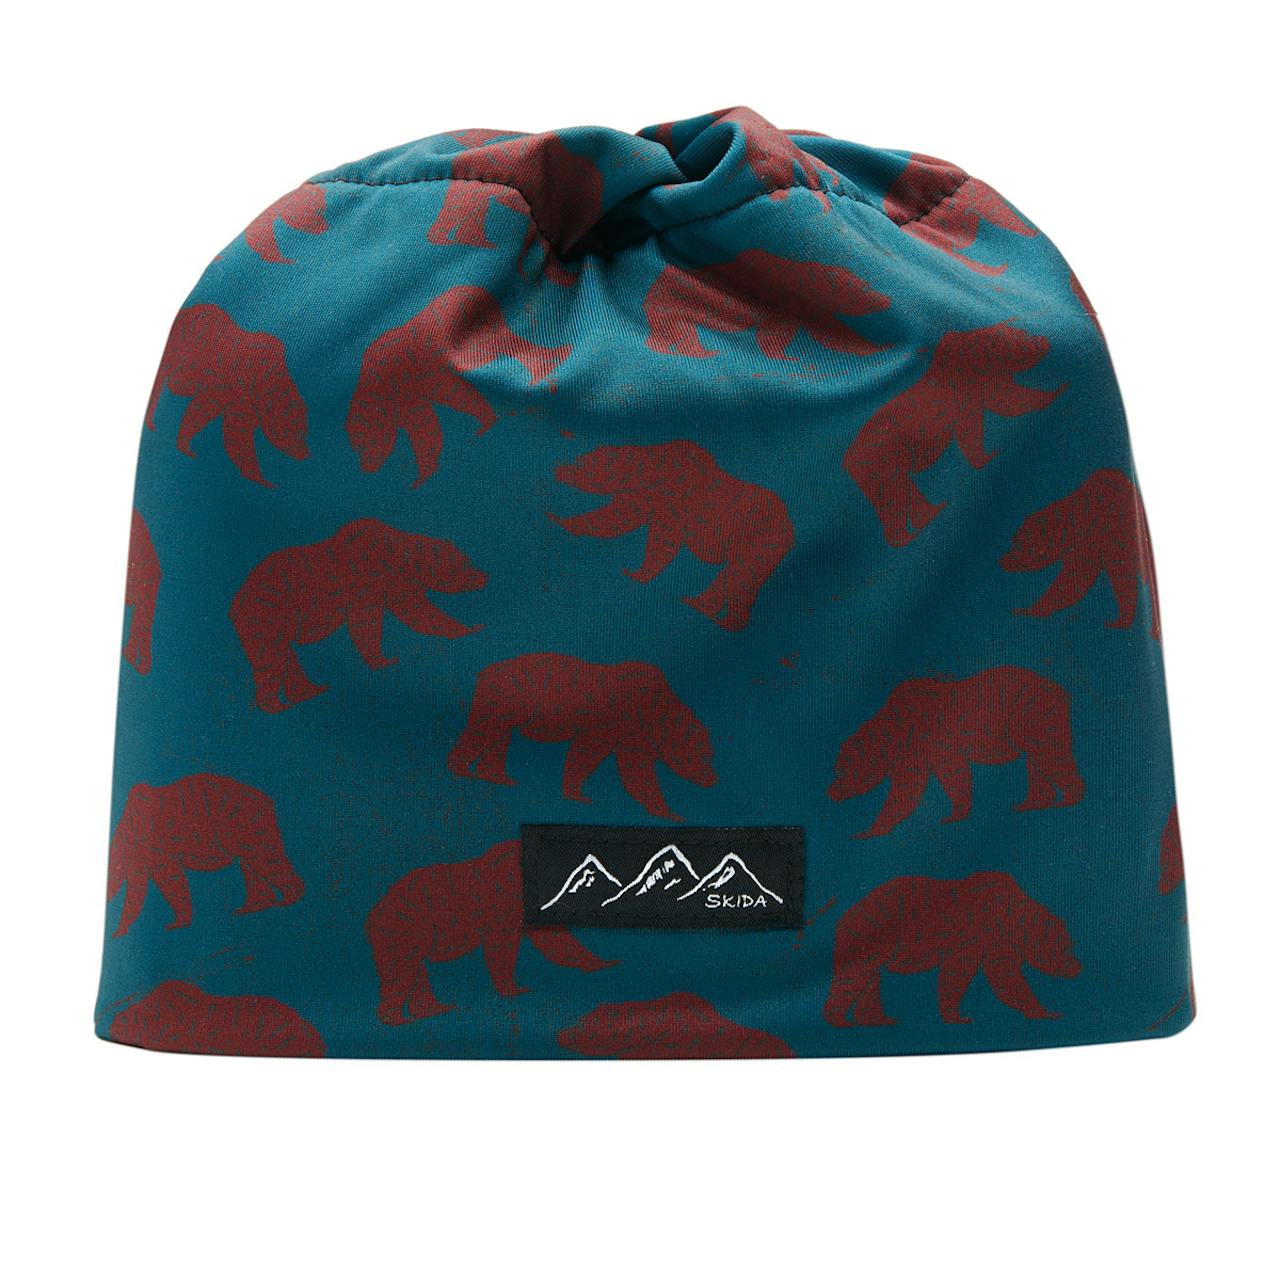 Skida Alpine Fleece-Lined Hat